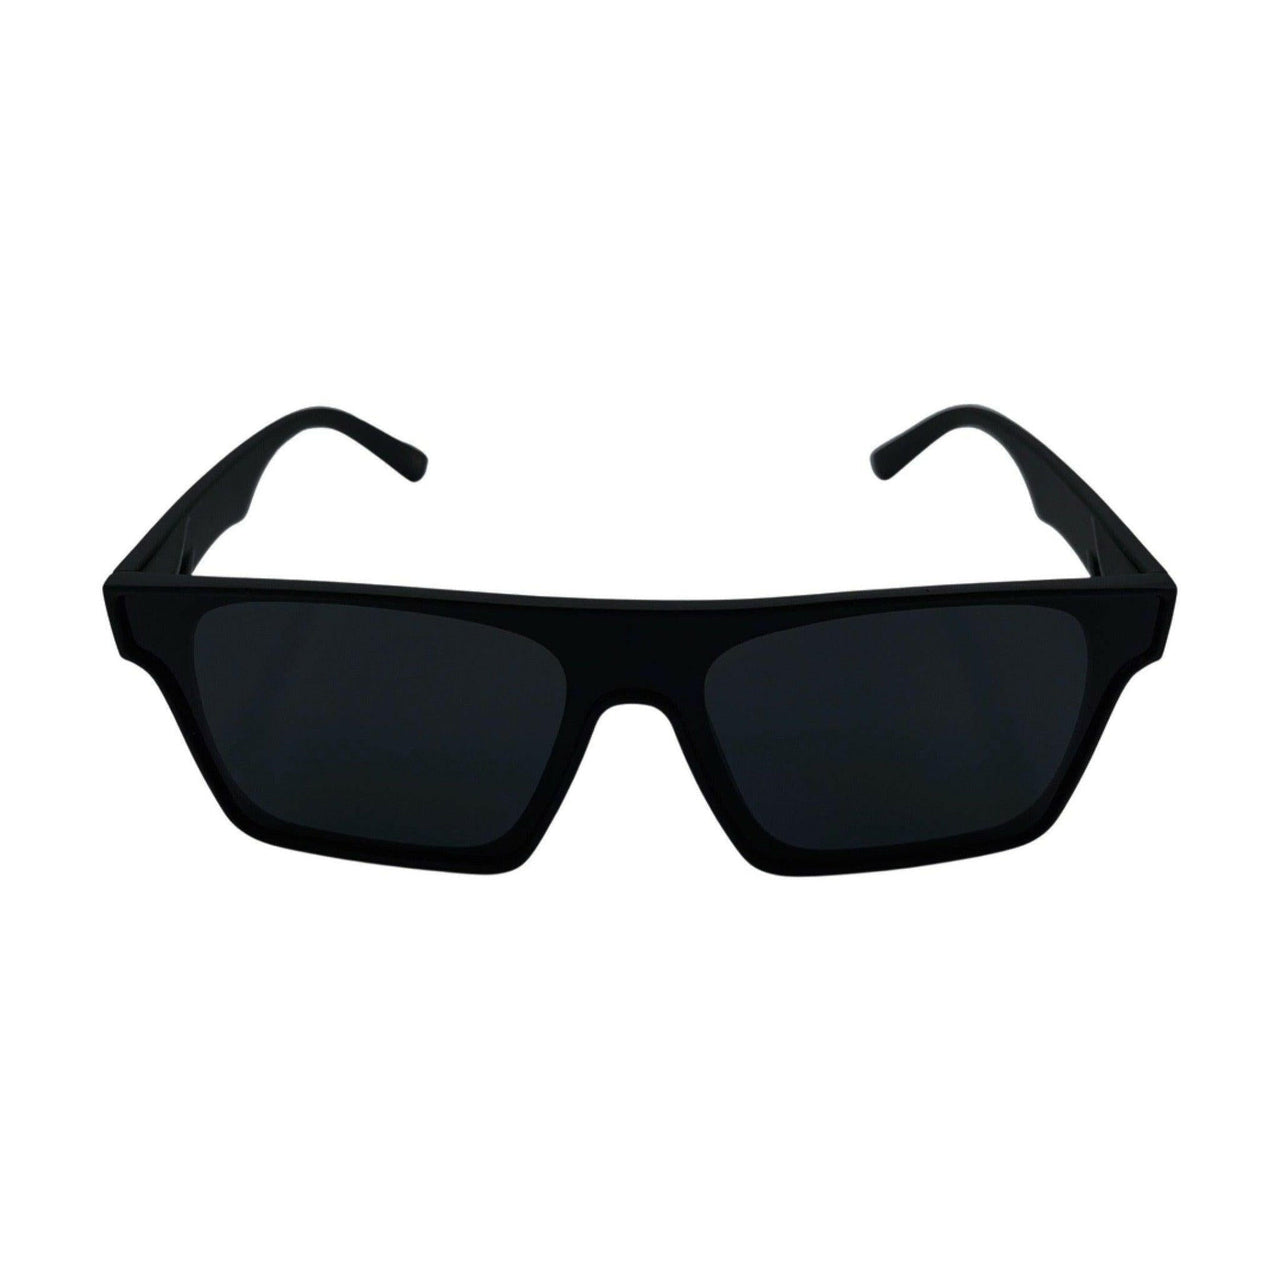 Black Party Shades Polarized Lens Sunglasses - Rebel Reaper Clothing CompanySunglasses